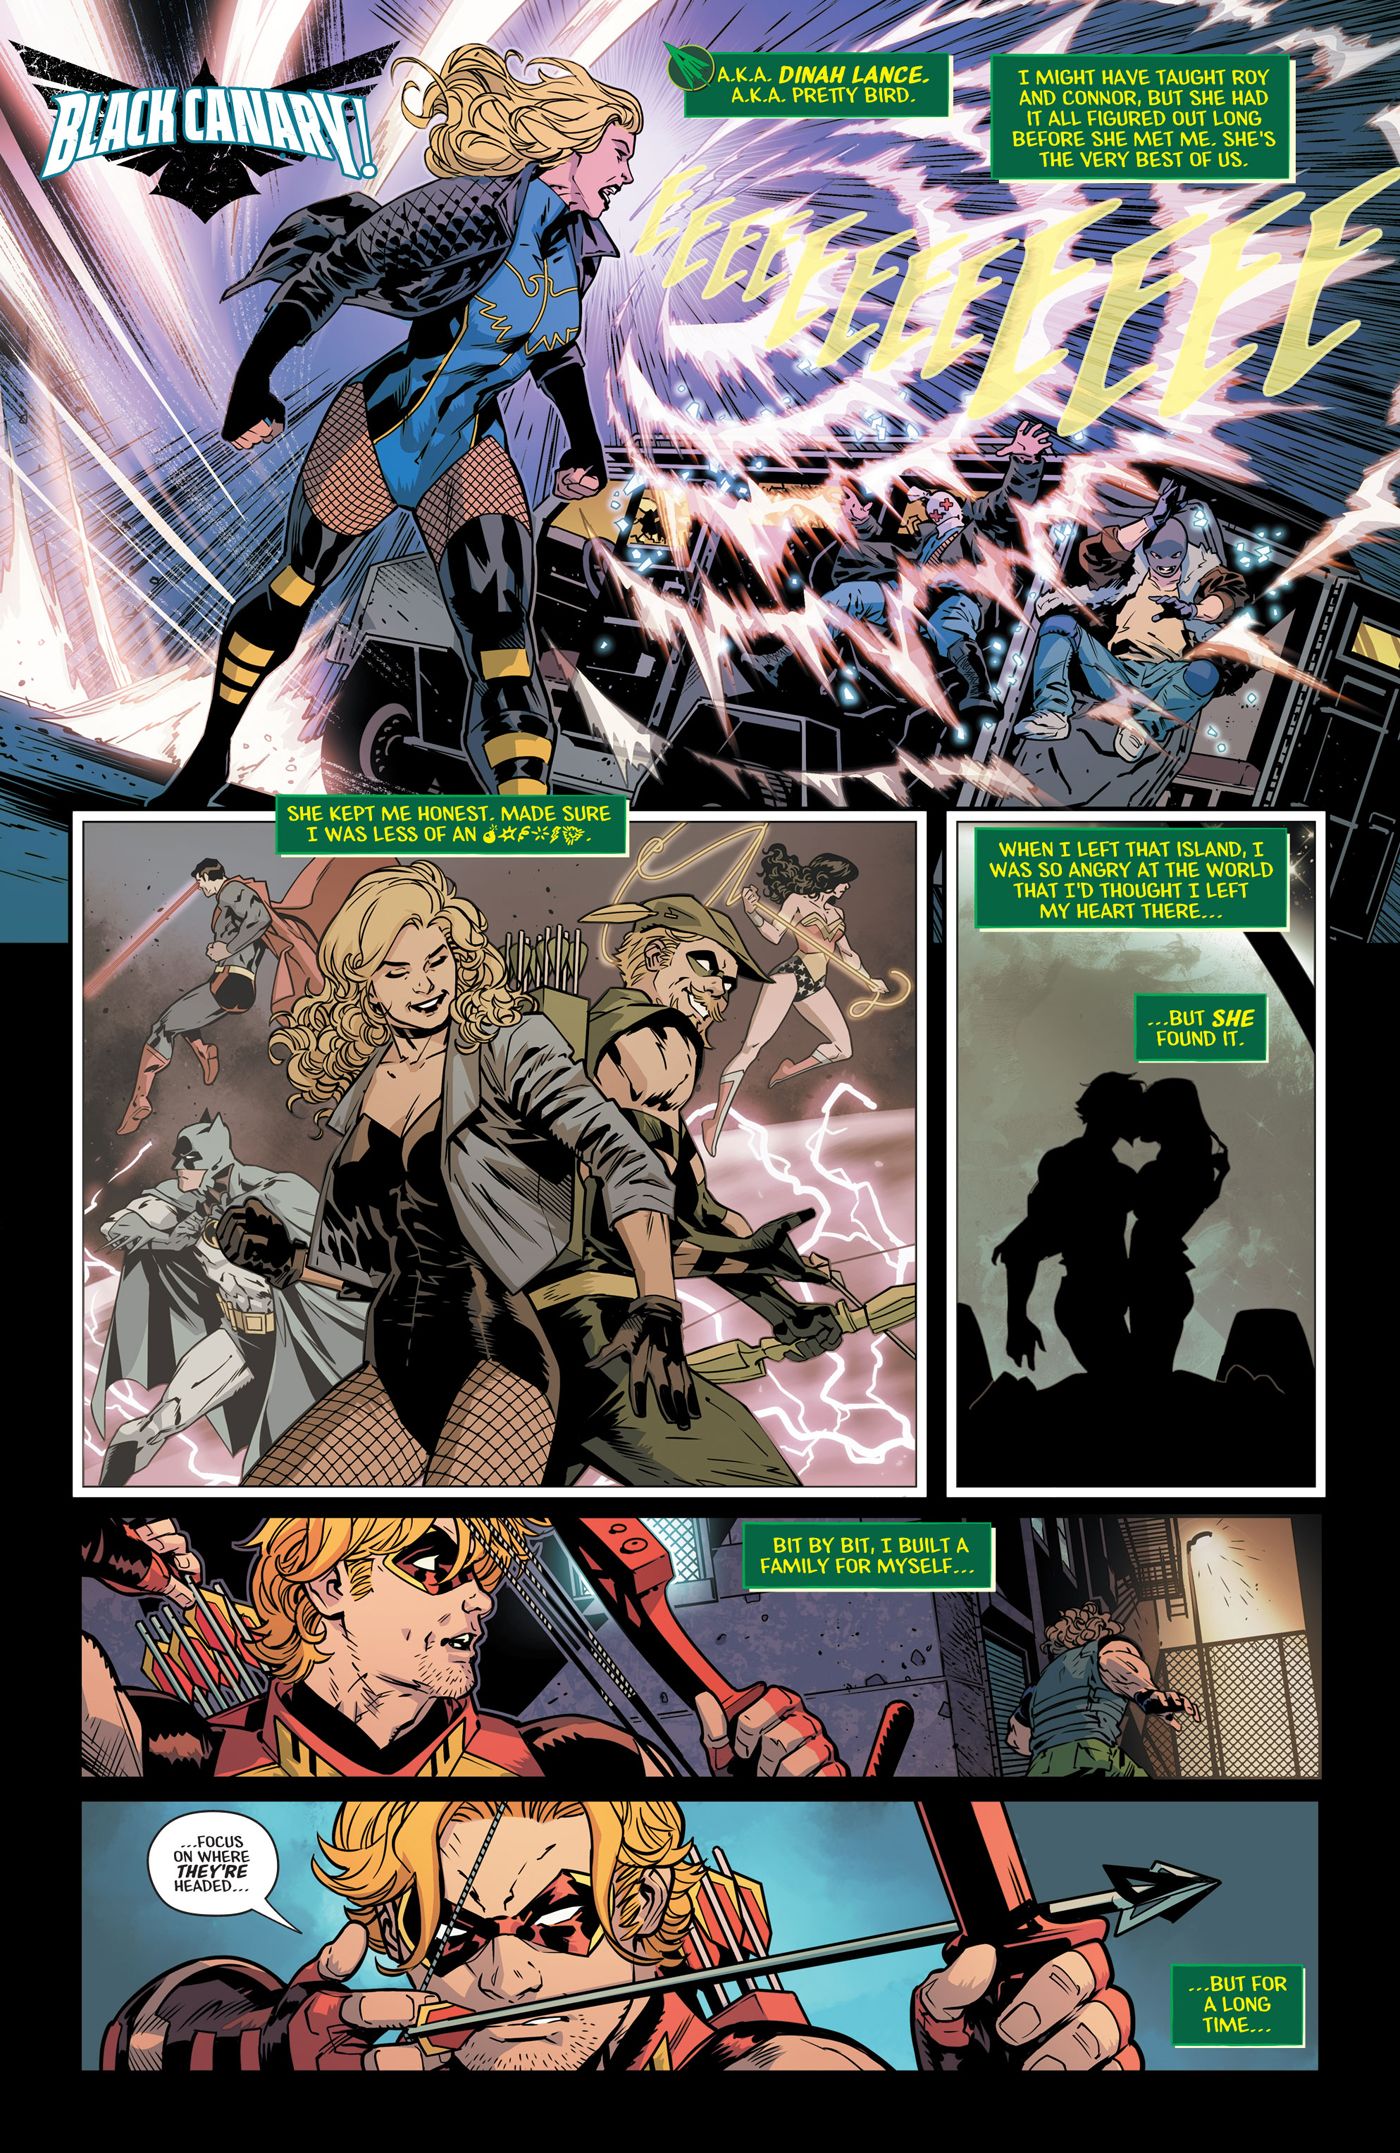 A look at Green Arrow #1 (2023) from DC Comics.